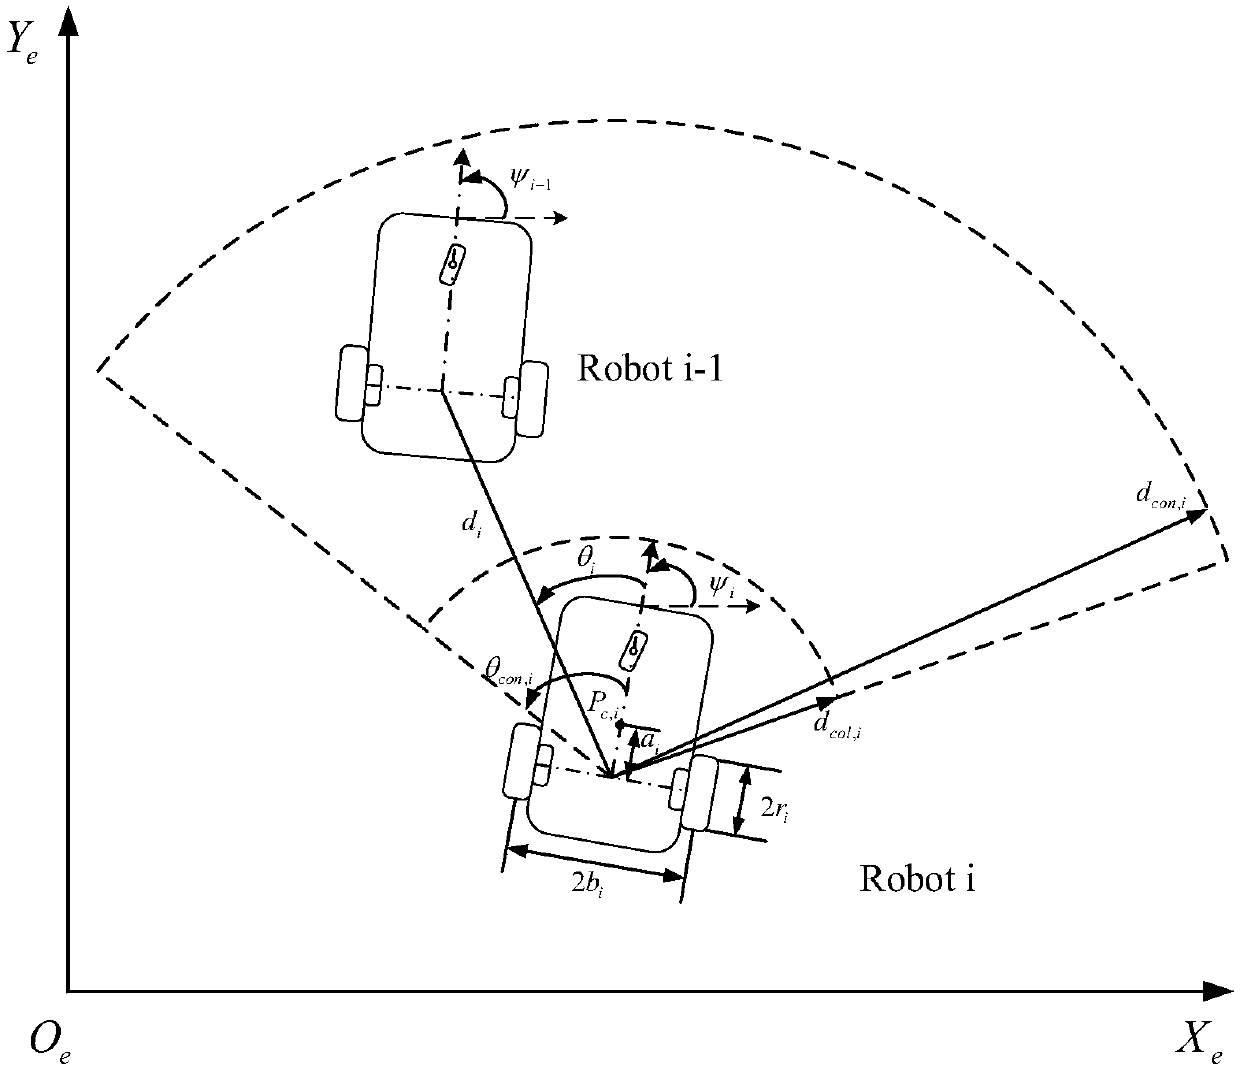 Formation control method of mobile robots under constraint of communication range